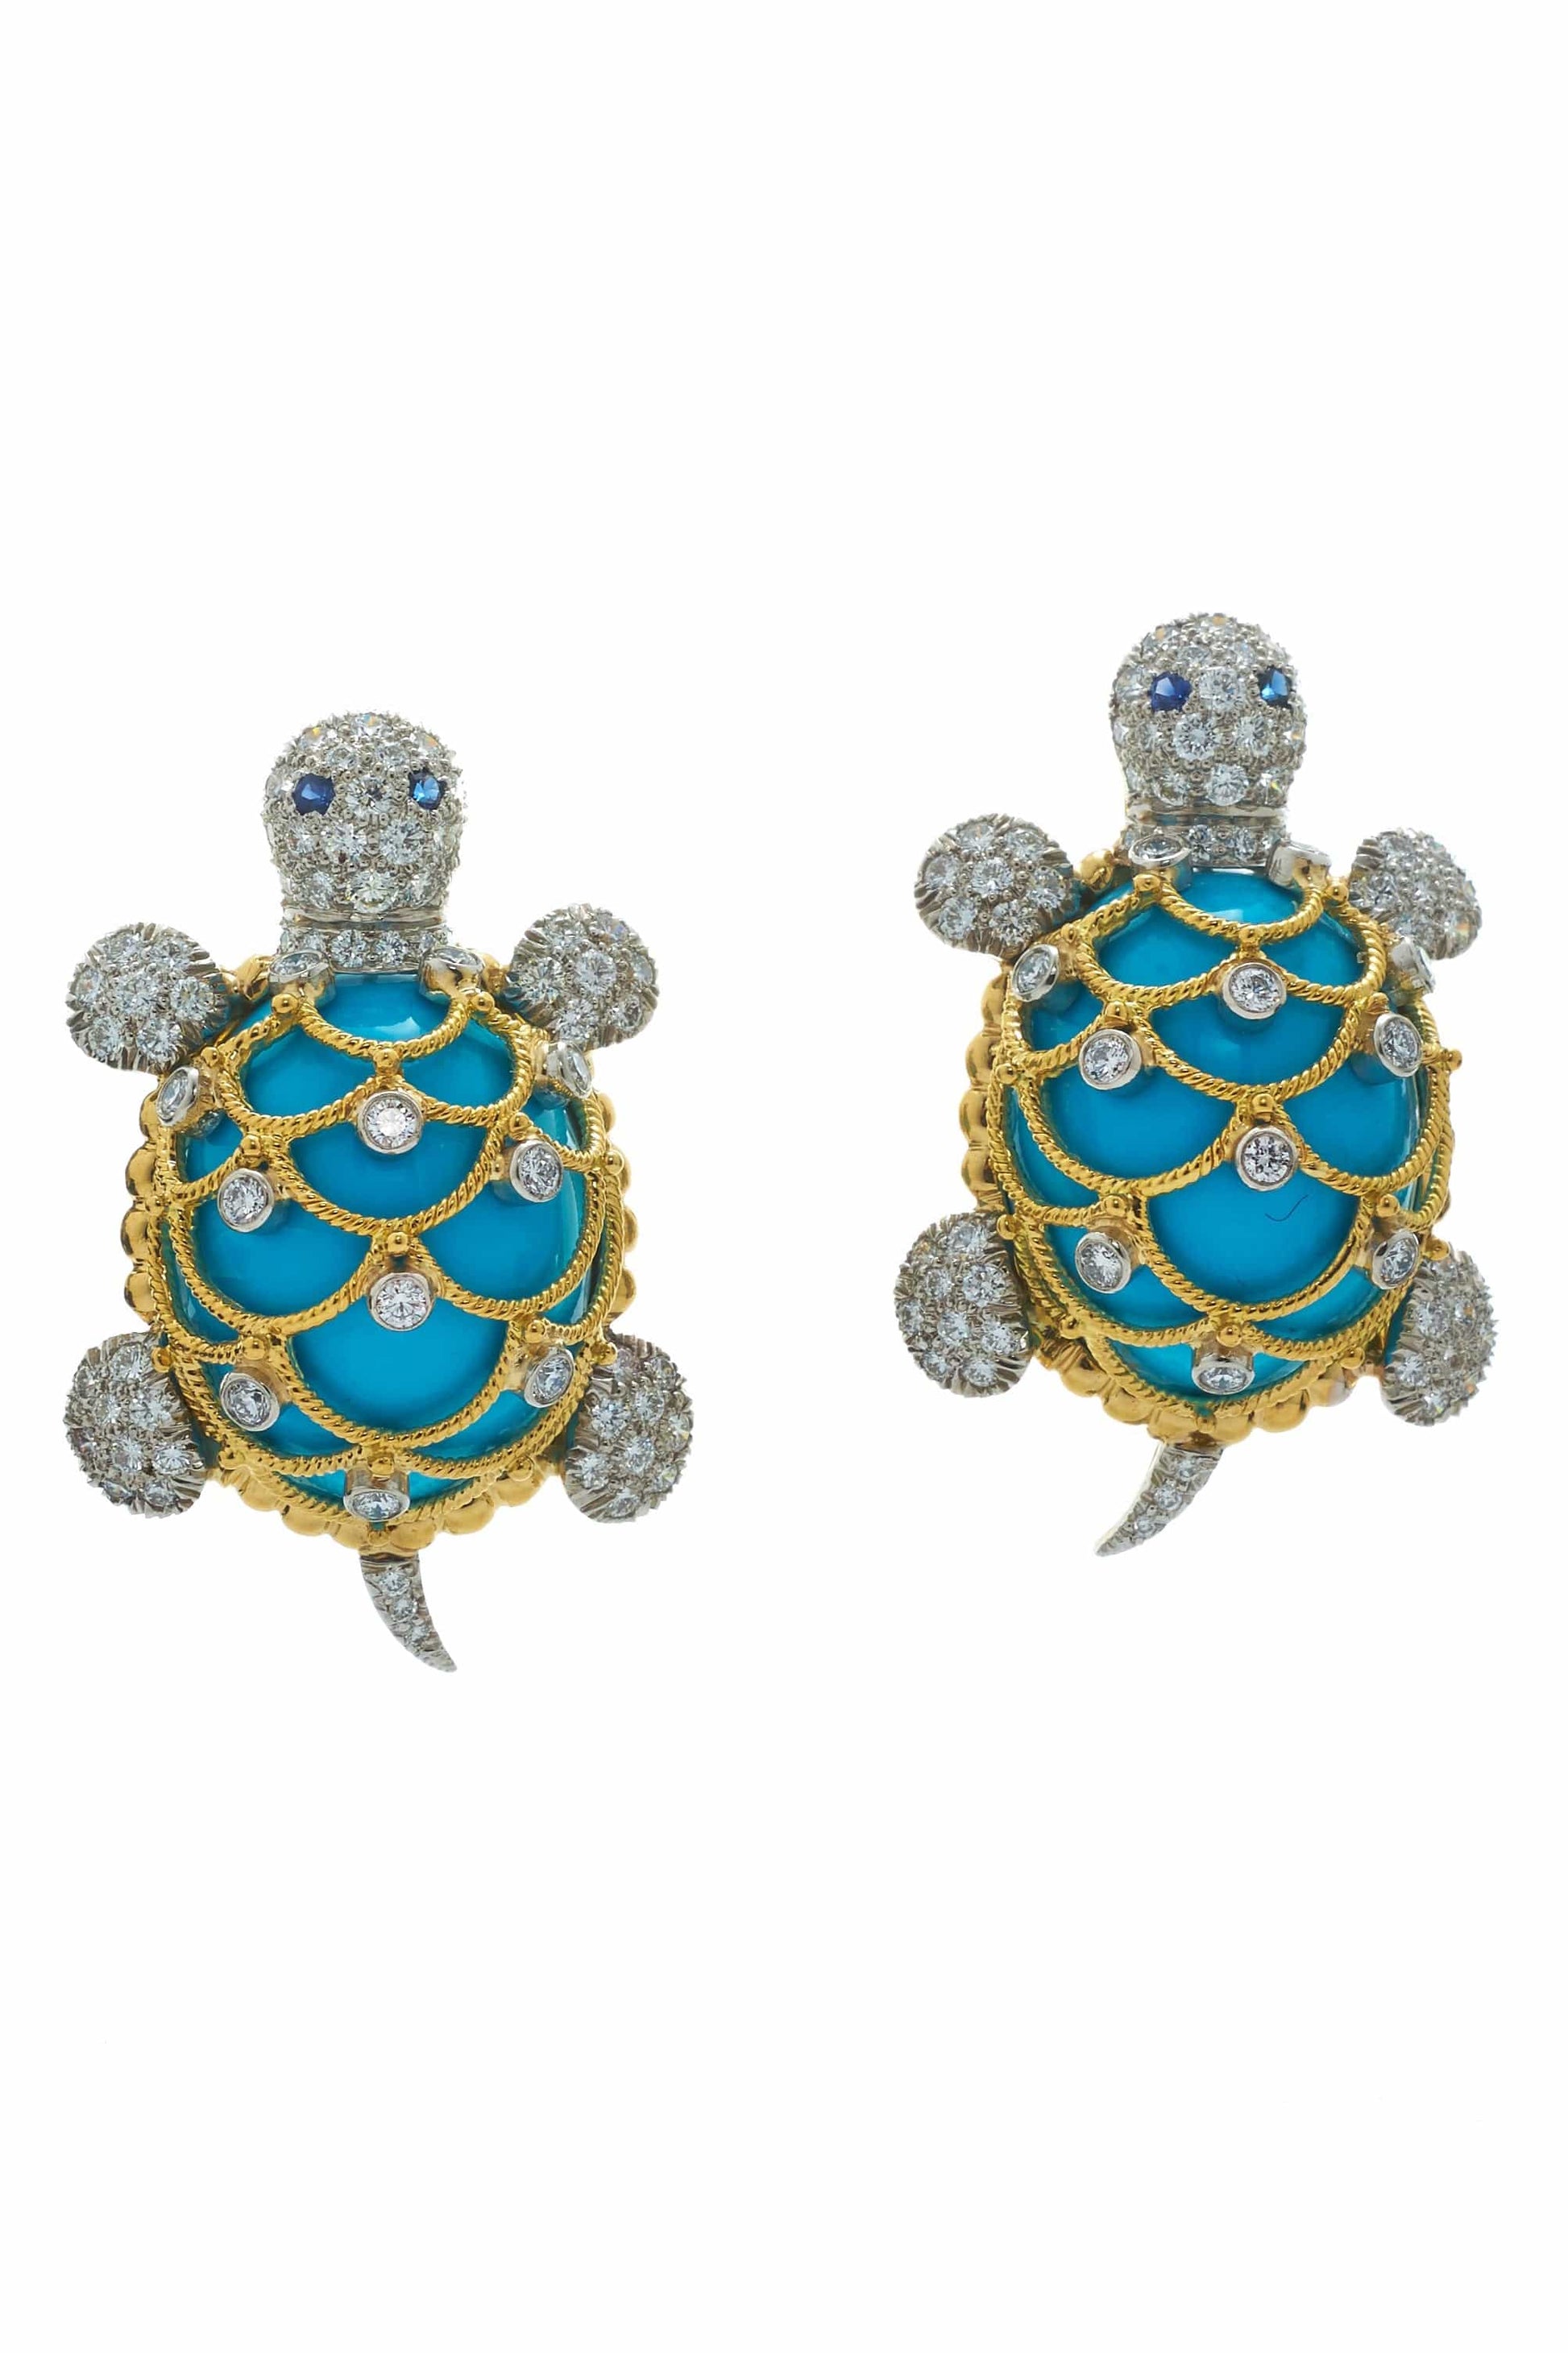 DAVID WEBB-Turquoise Turtle Earrings-YELLOW GOLD